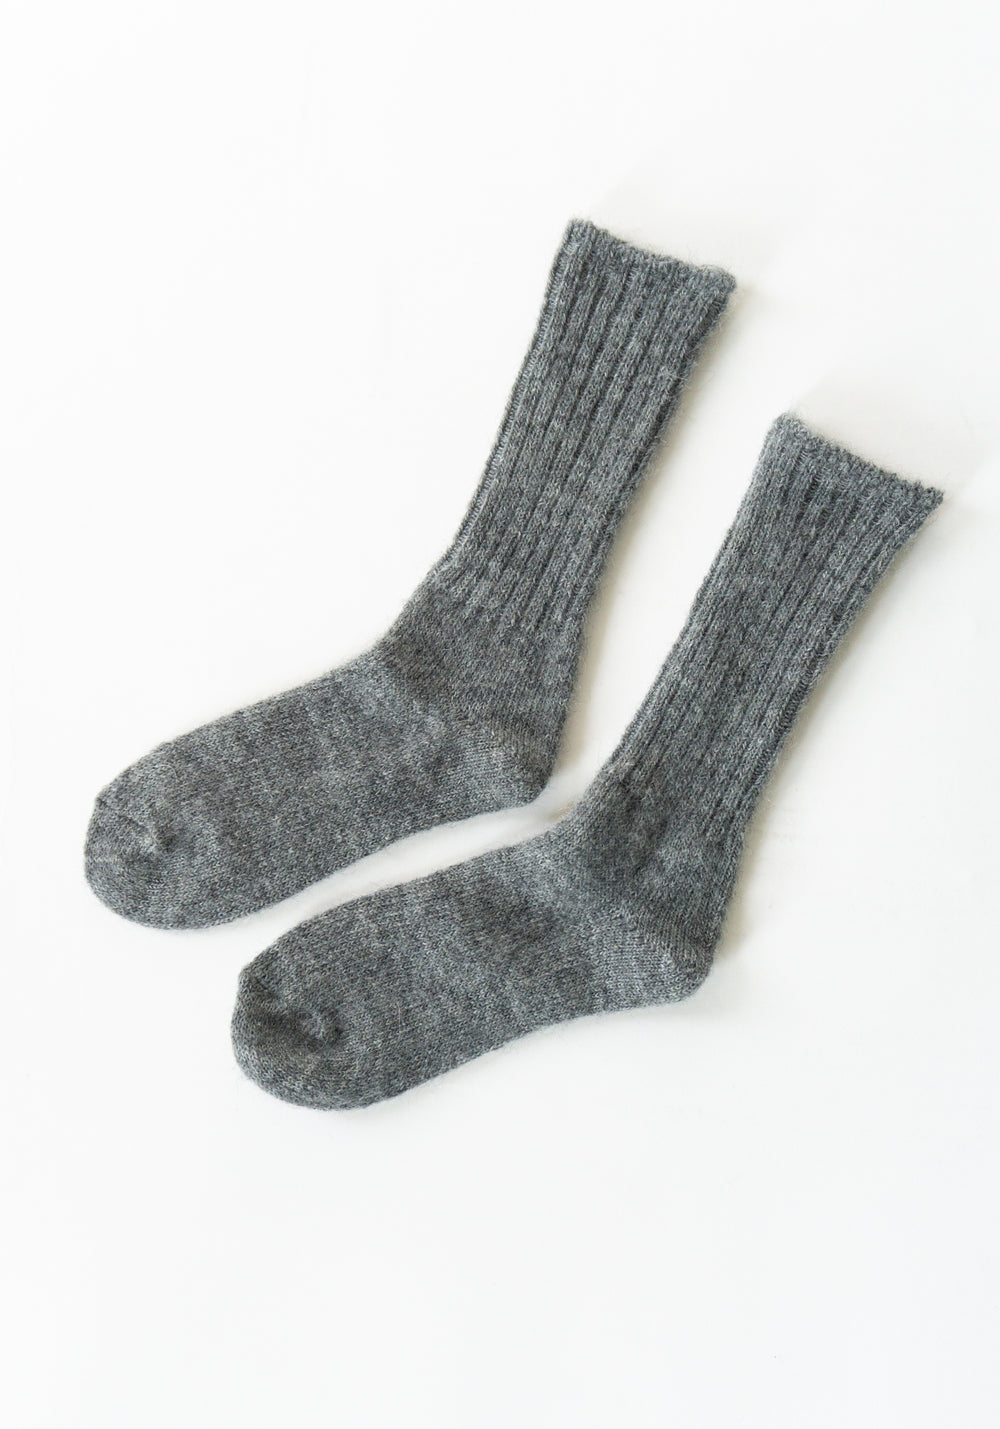 Accessories >Socks – VESTIGE